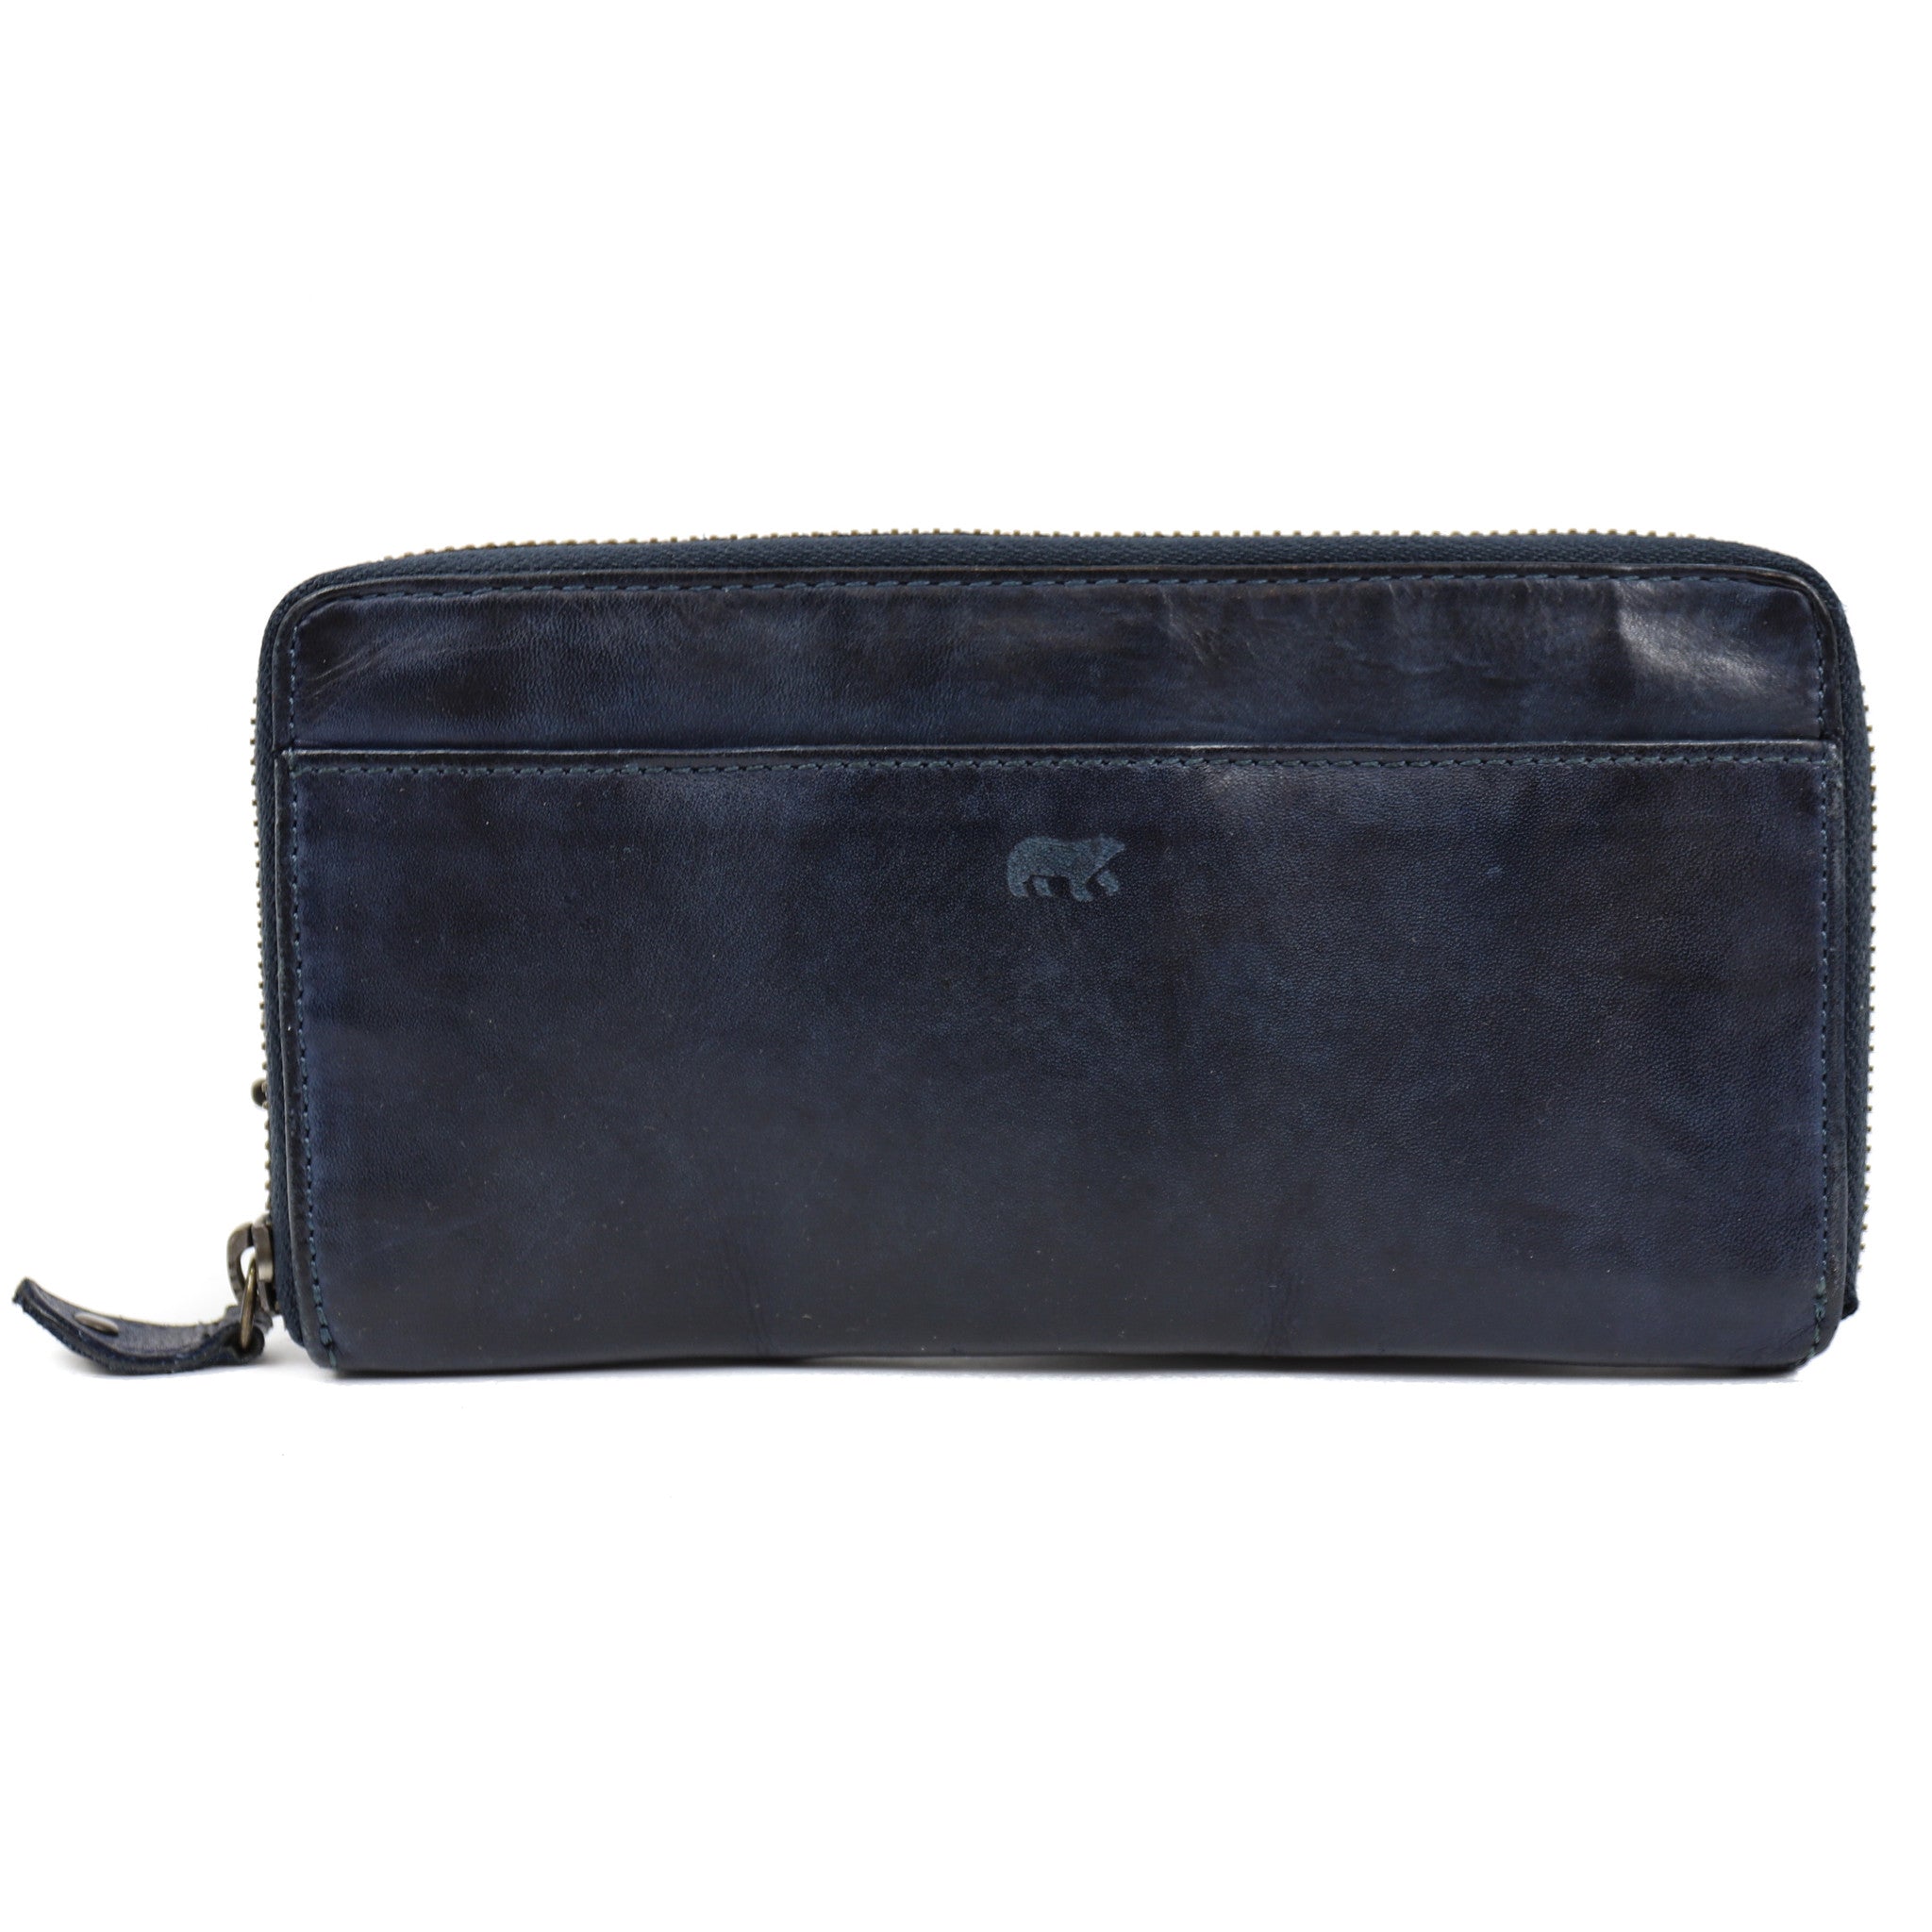 Zipper wallet 'Sofie' dark blue - CL 15882